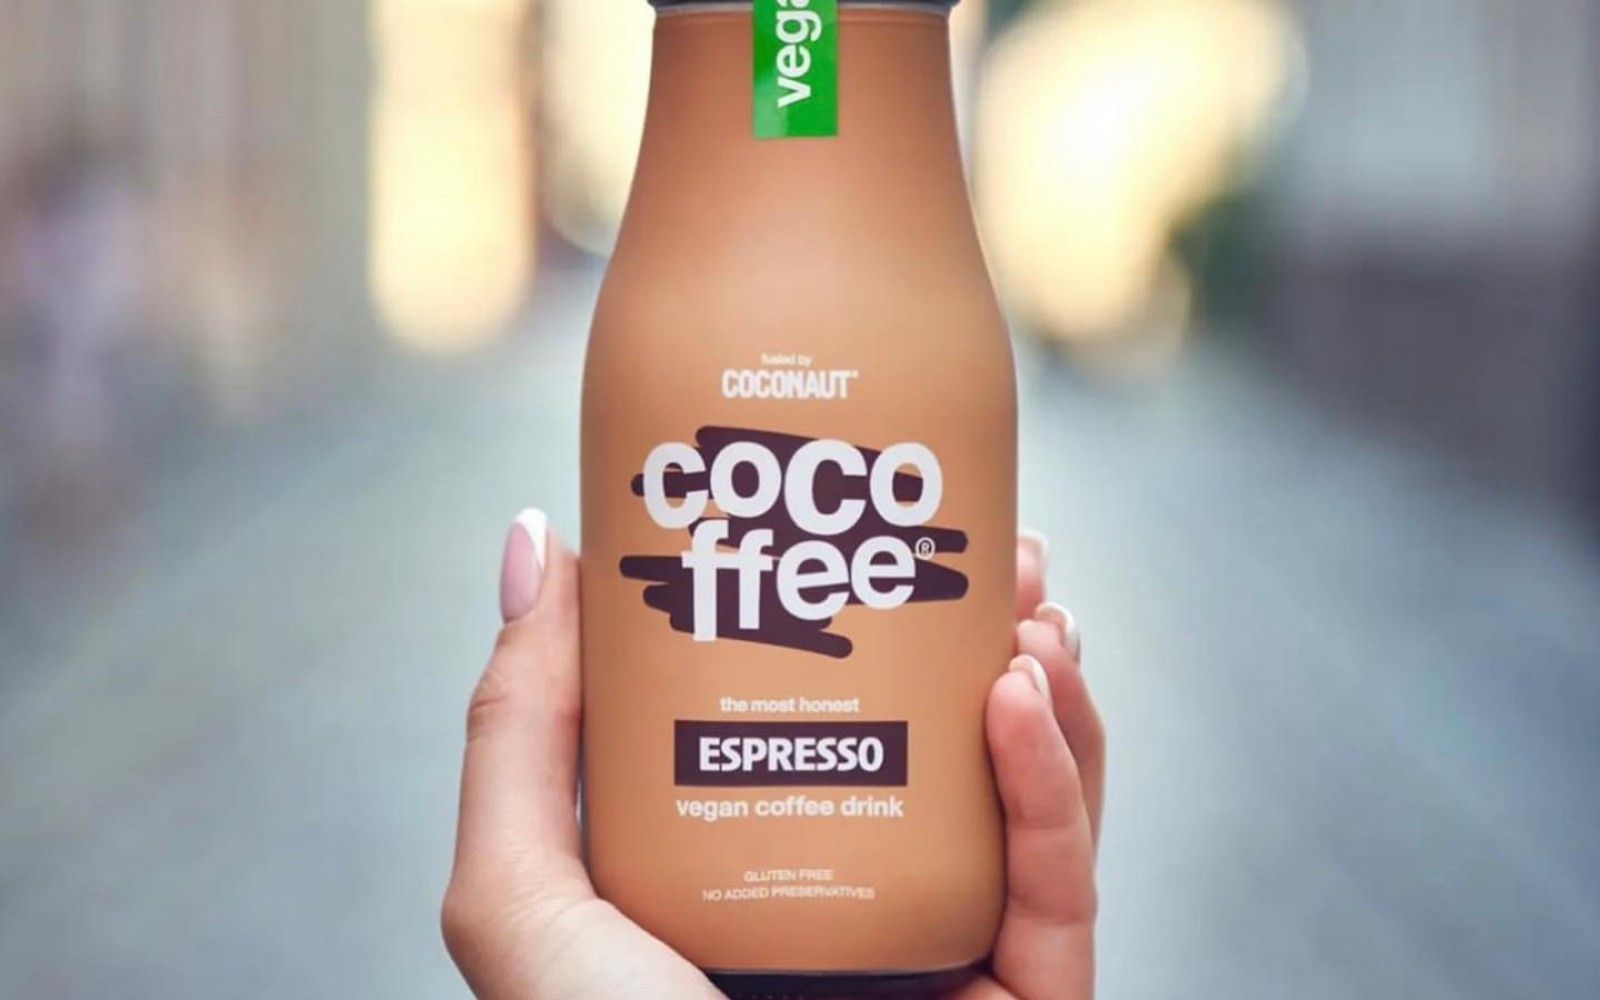 Vegan coconut water-based coffee is both refreshing and tasty